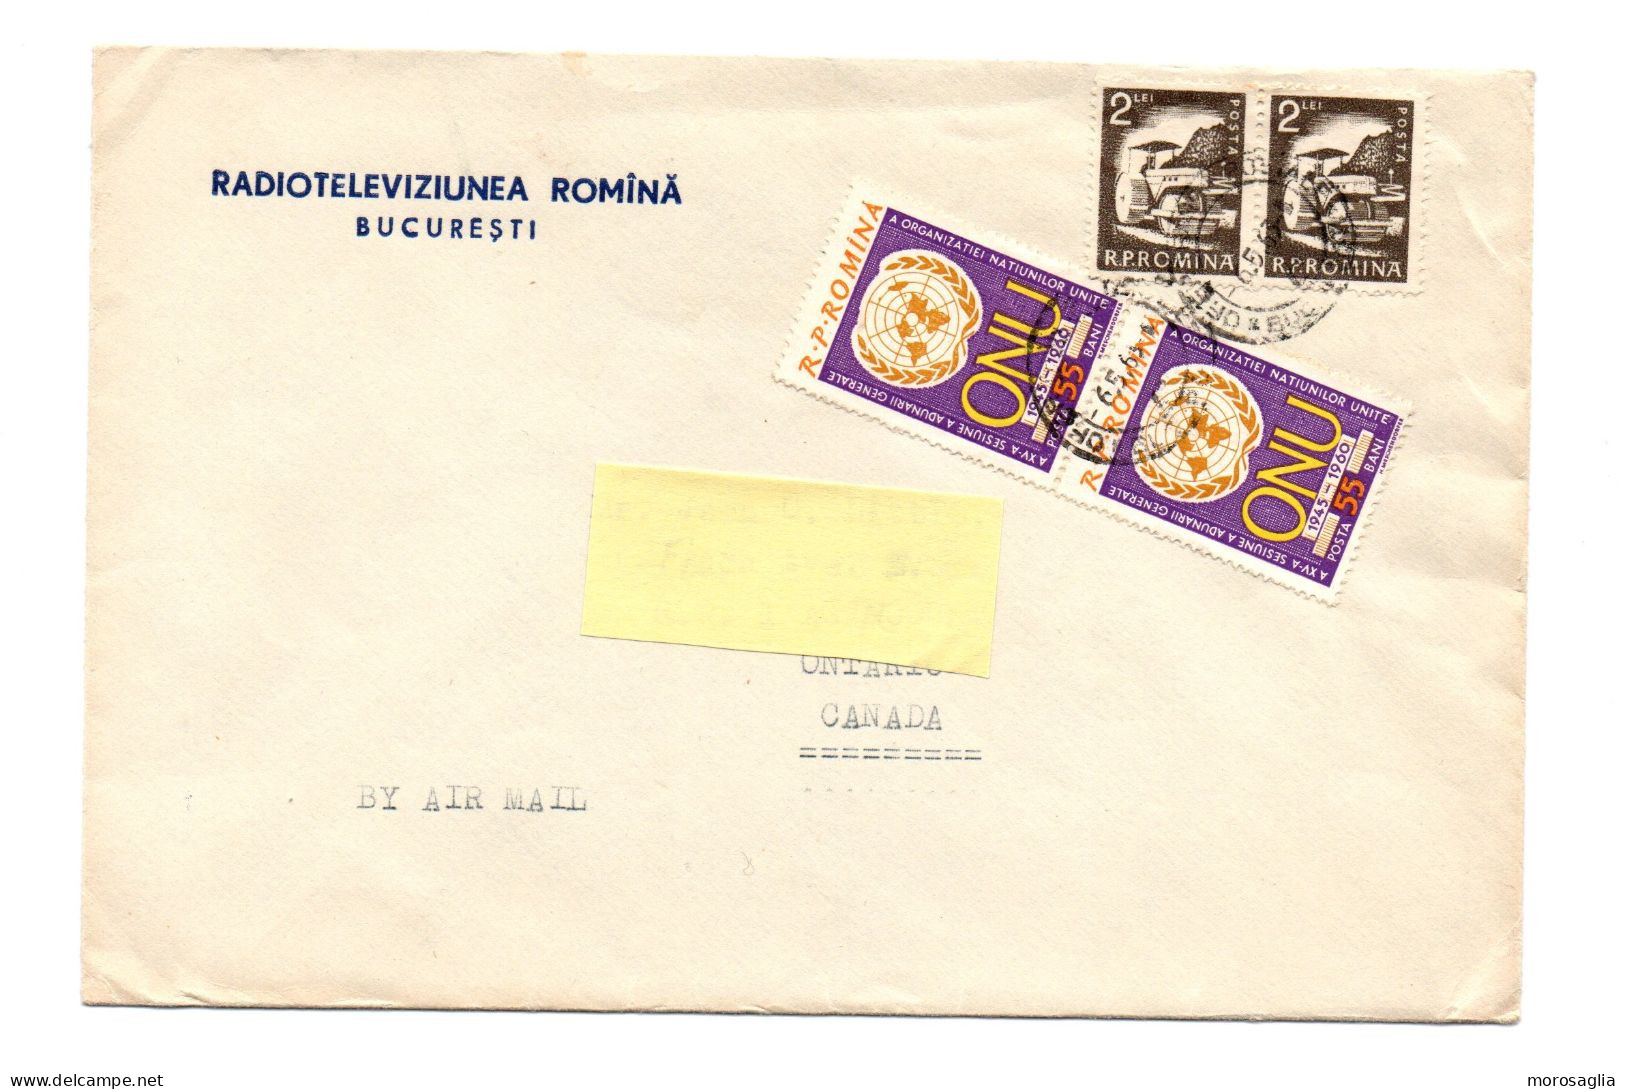 RADIO TV - ROMANIA - RADIOTELEVIZIUNEA ROMINA OLD COVER TO CANADA - Postmark Collection